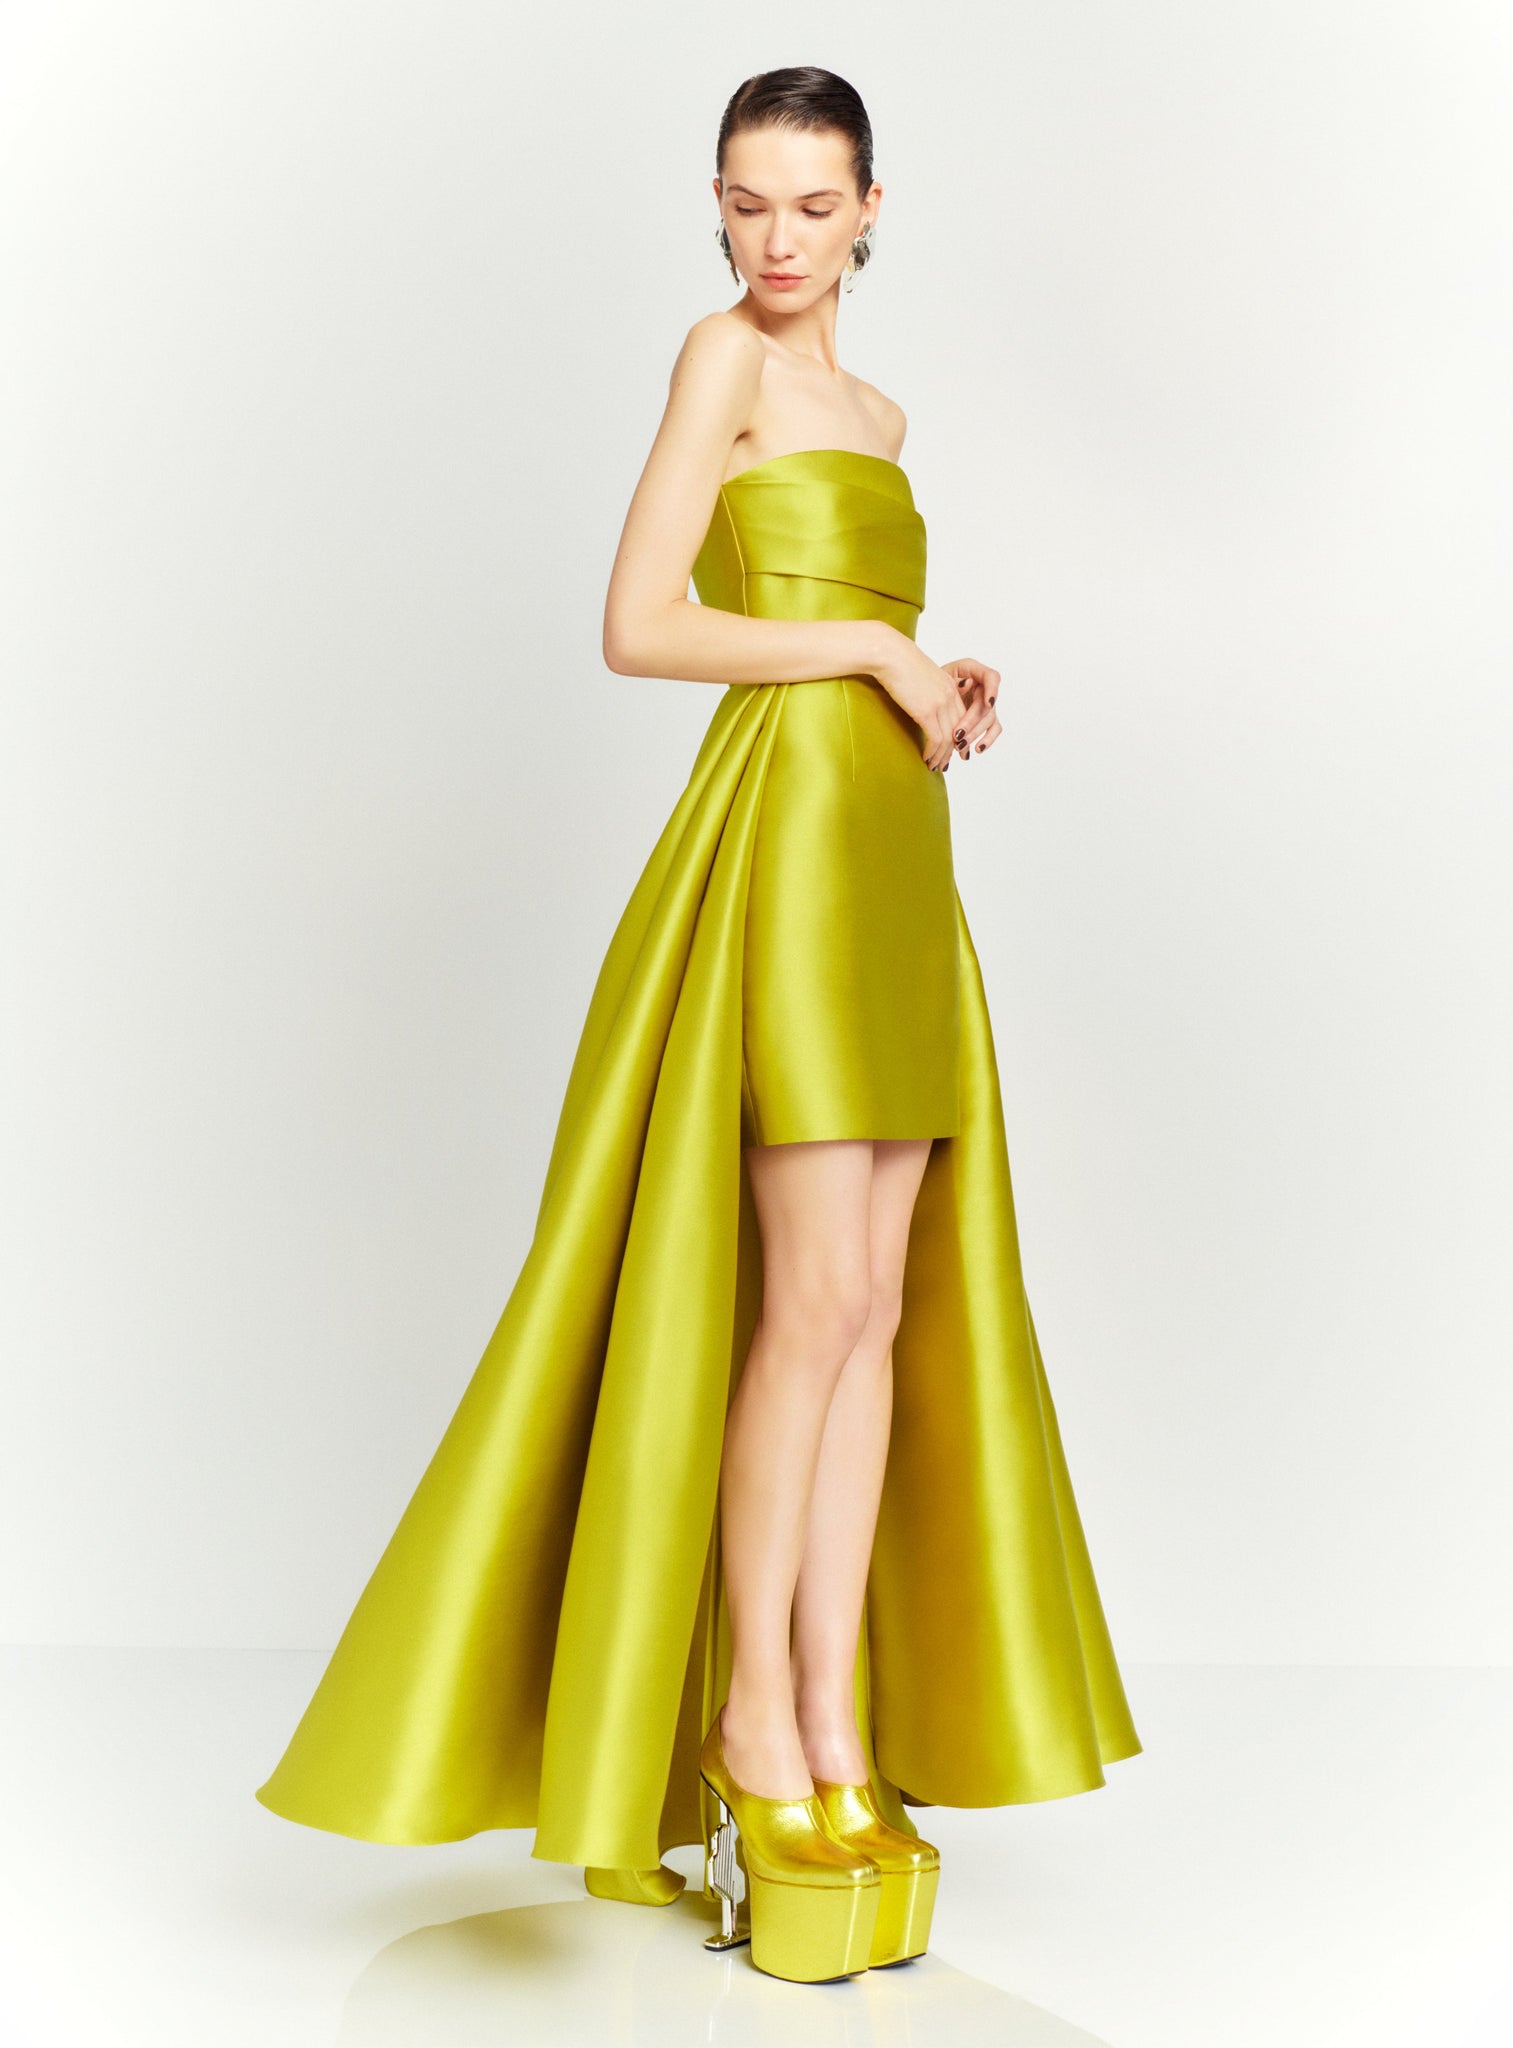 The Trina Mini Dress in Chartreuse